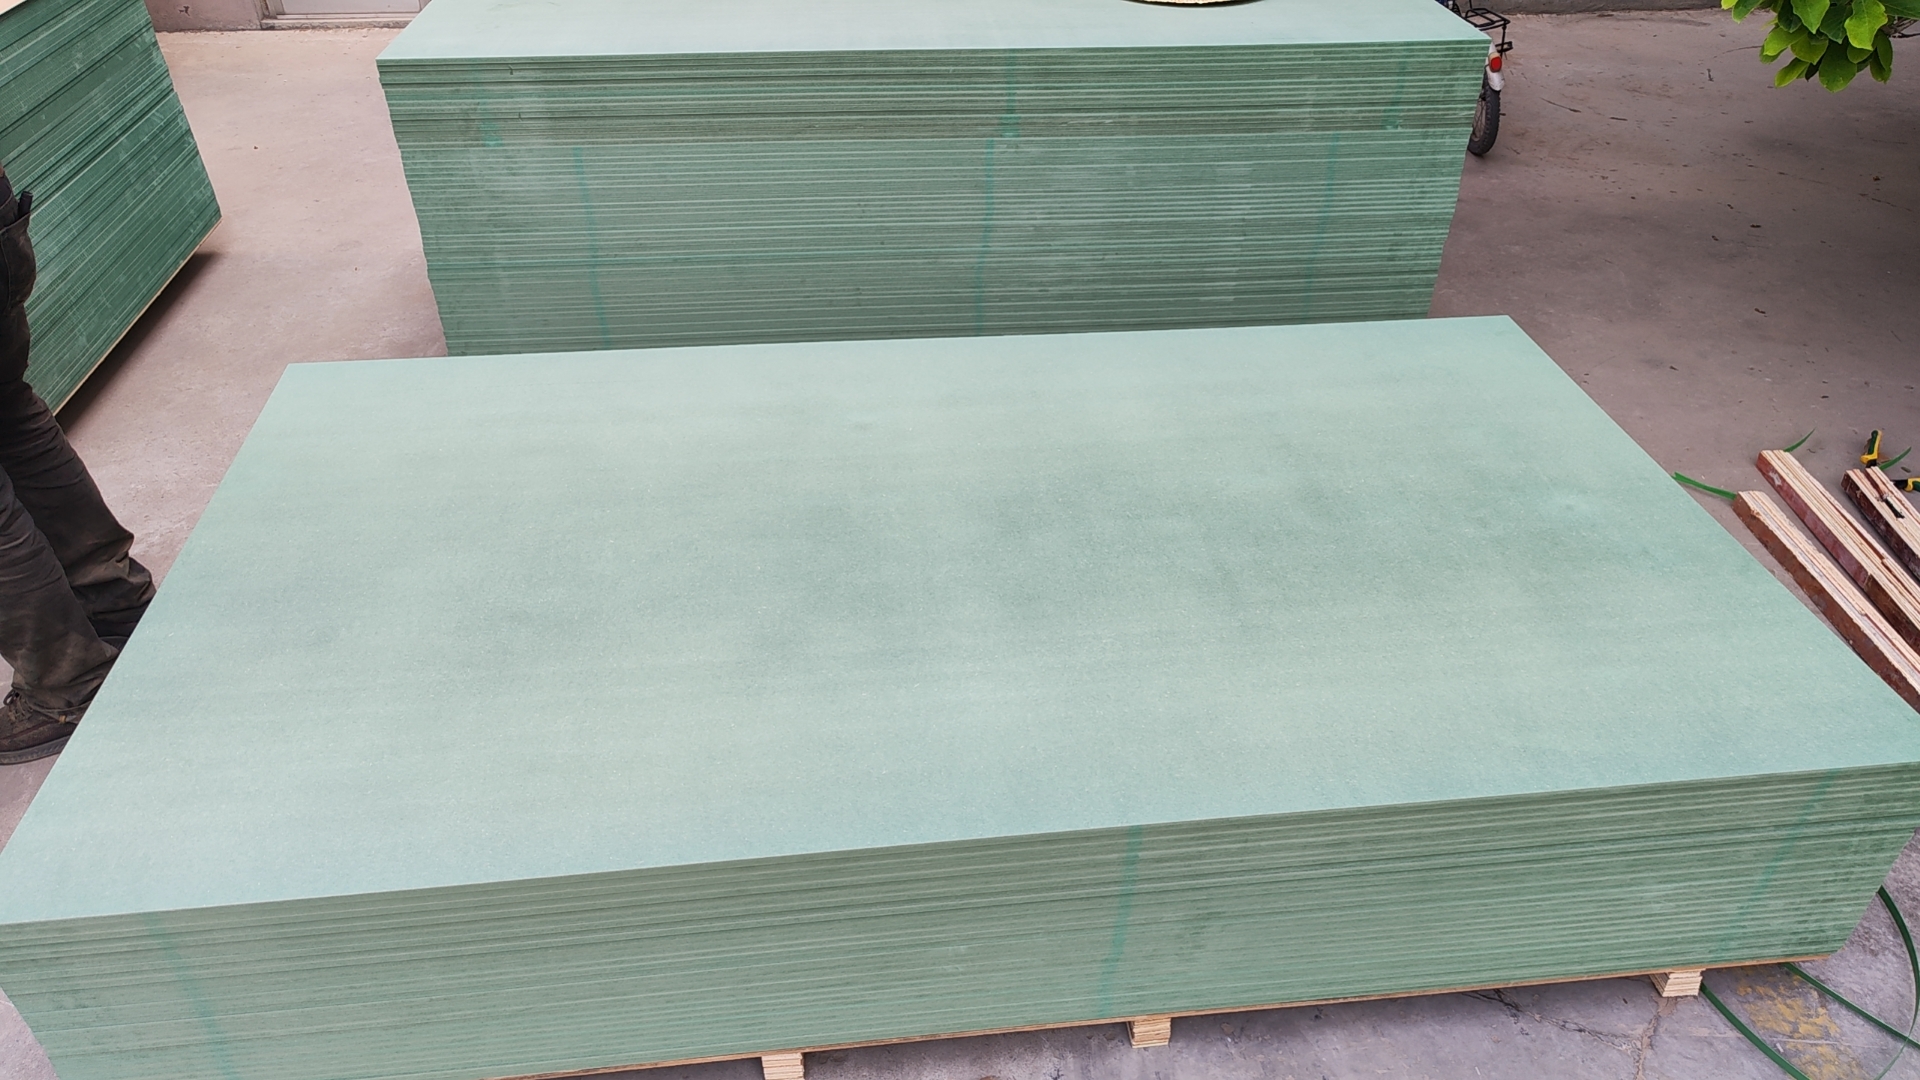 High density Green Waterproof (HMR) MDF Board E1 glue 